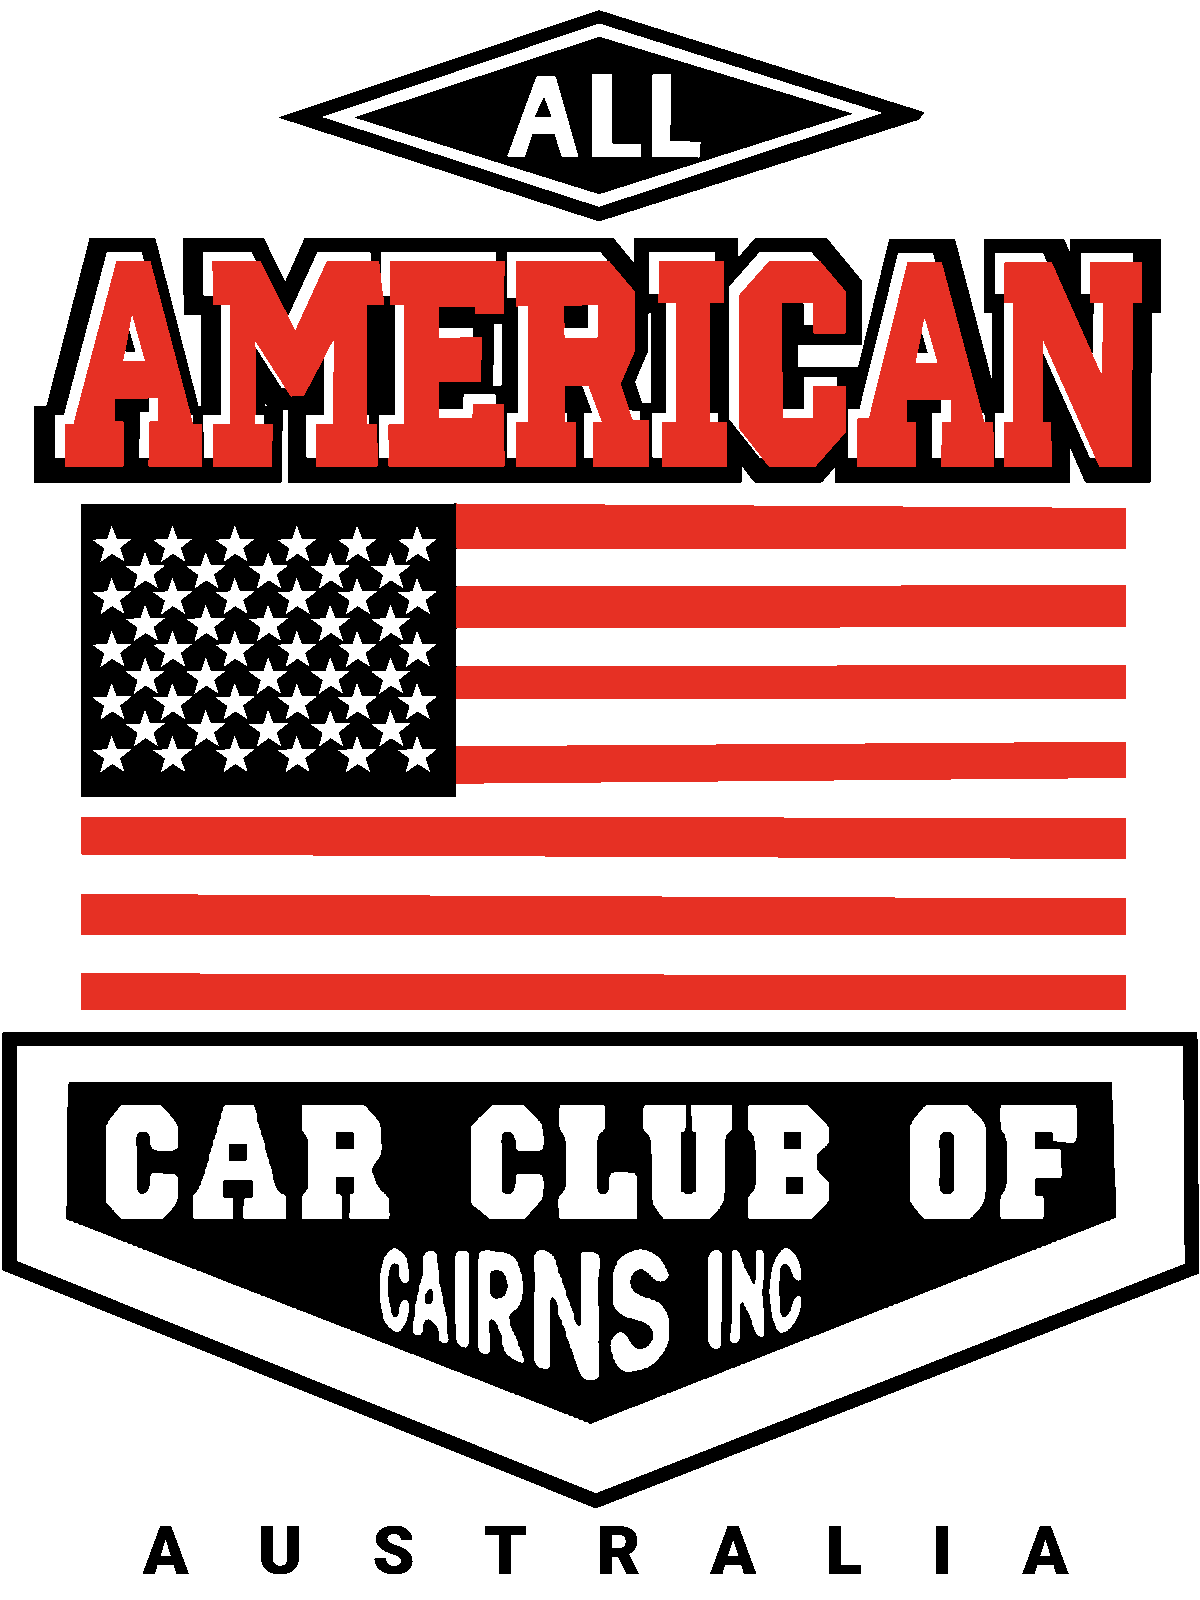 All American Car Club Of Cairns Inc.